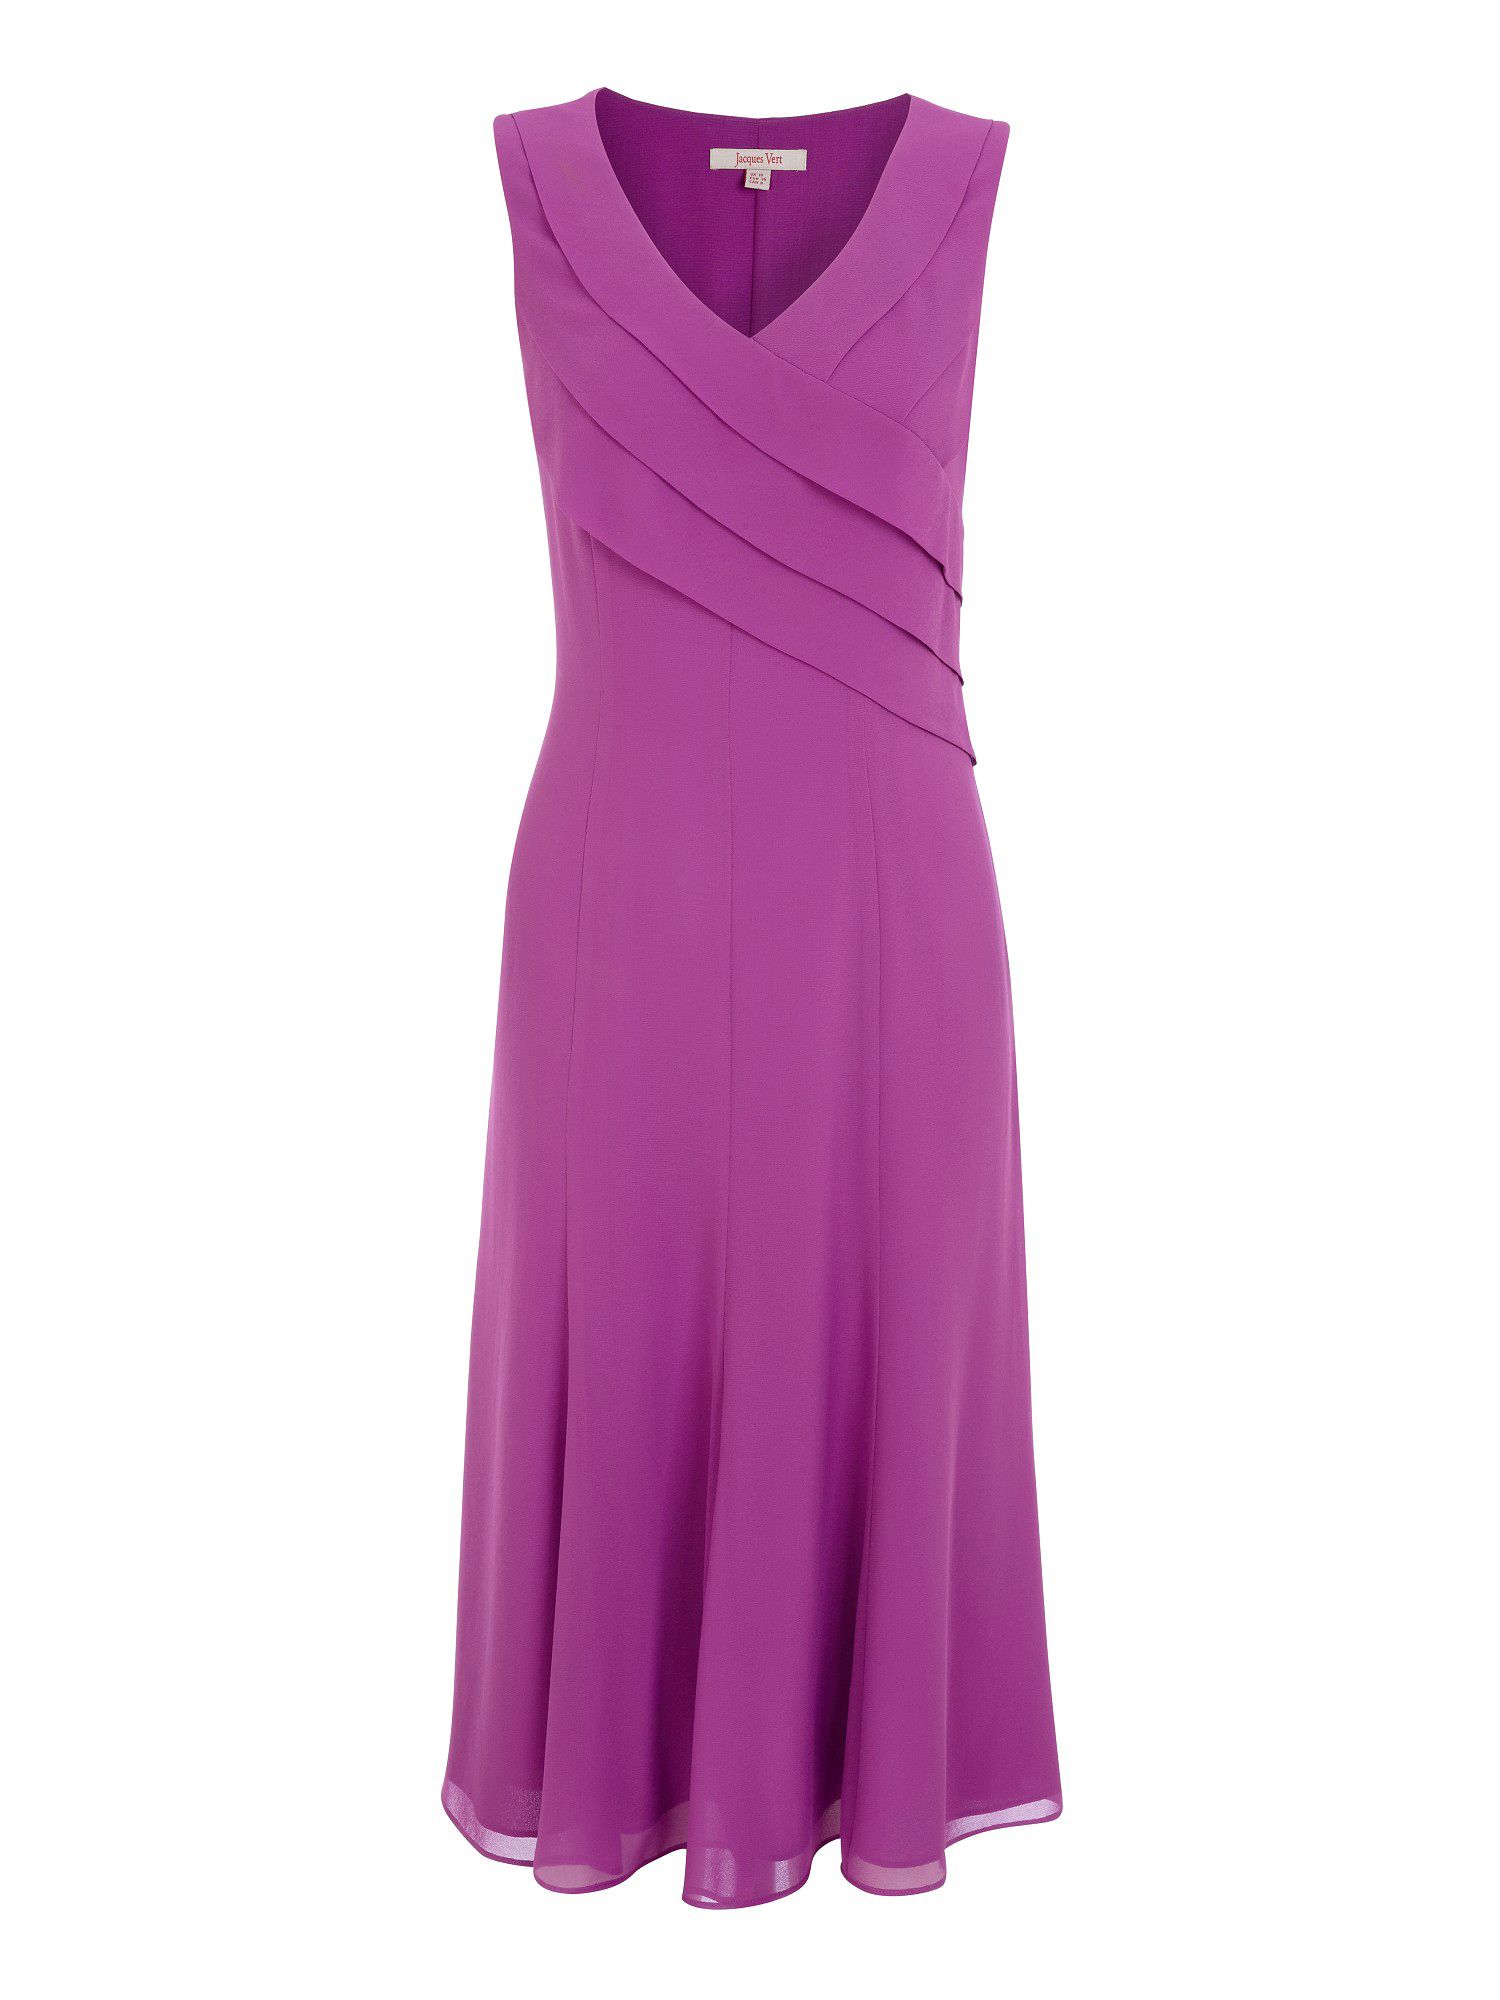 Jacques Vert Iris Pleated Chiffon Dress in Purple | Lyst